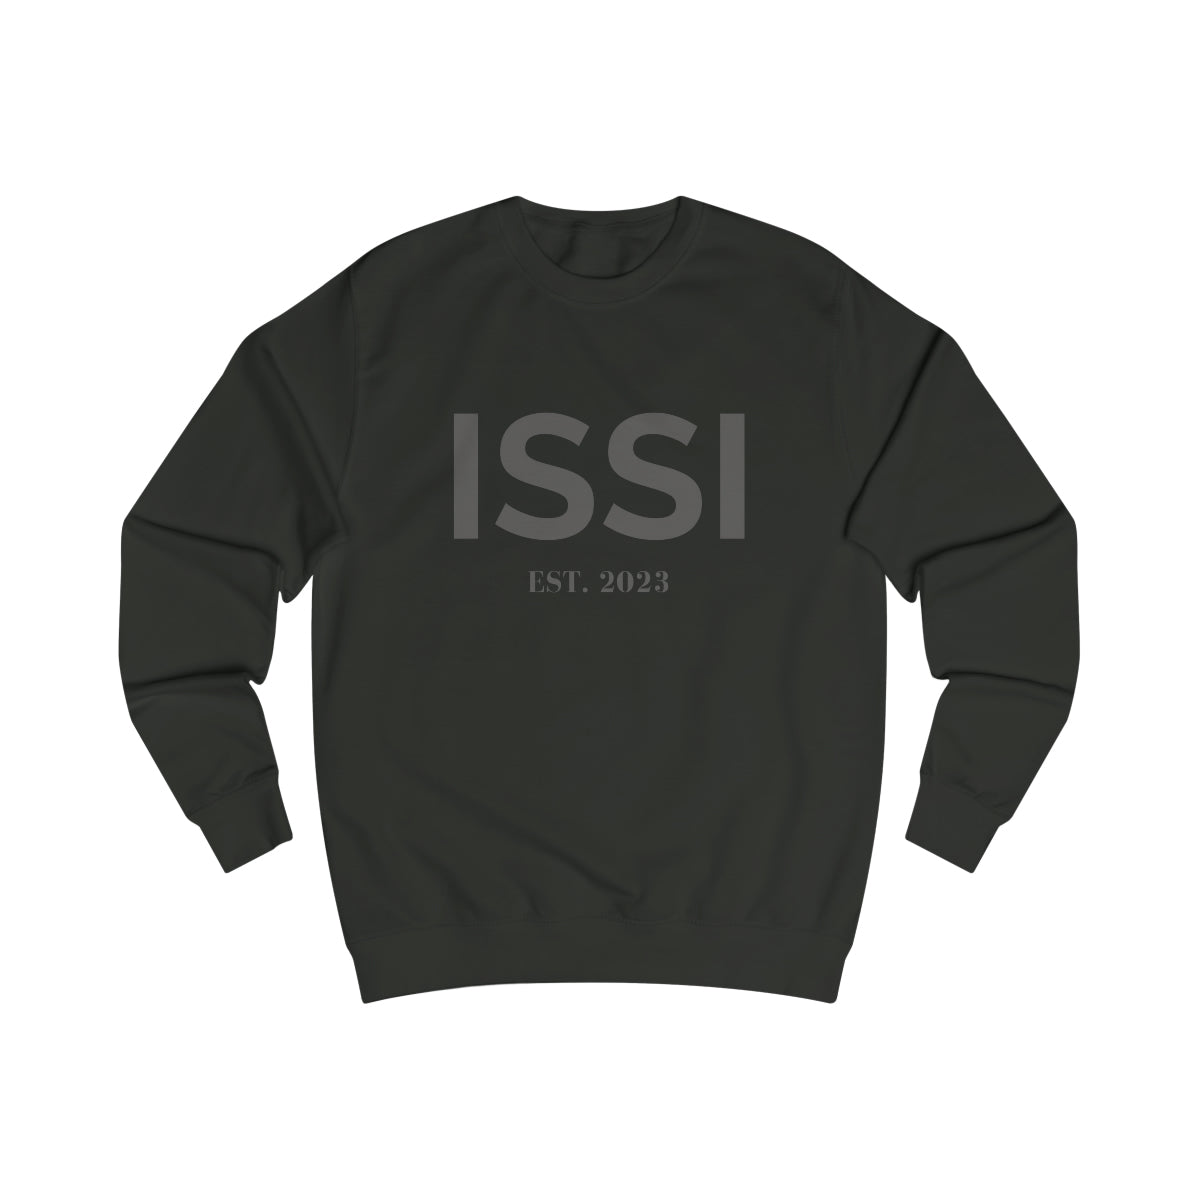 Issi est [year] Sweatshirt